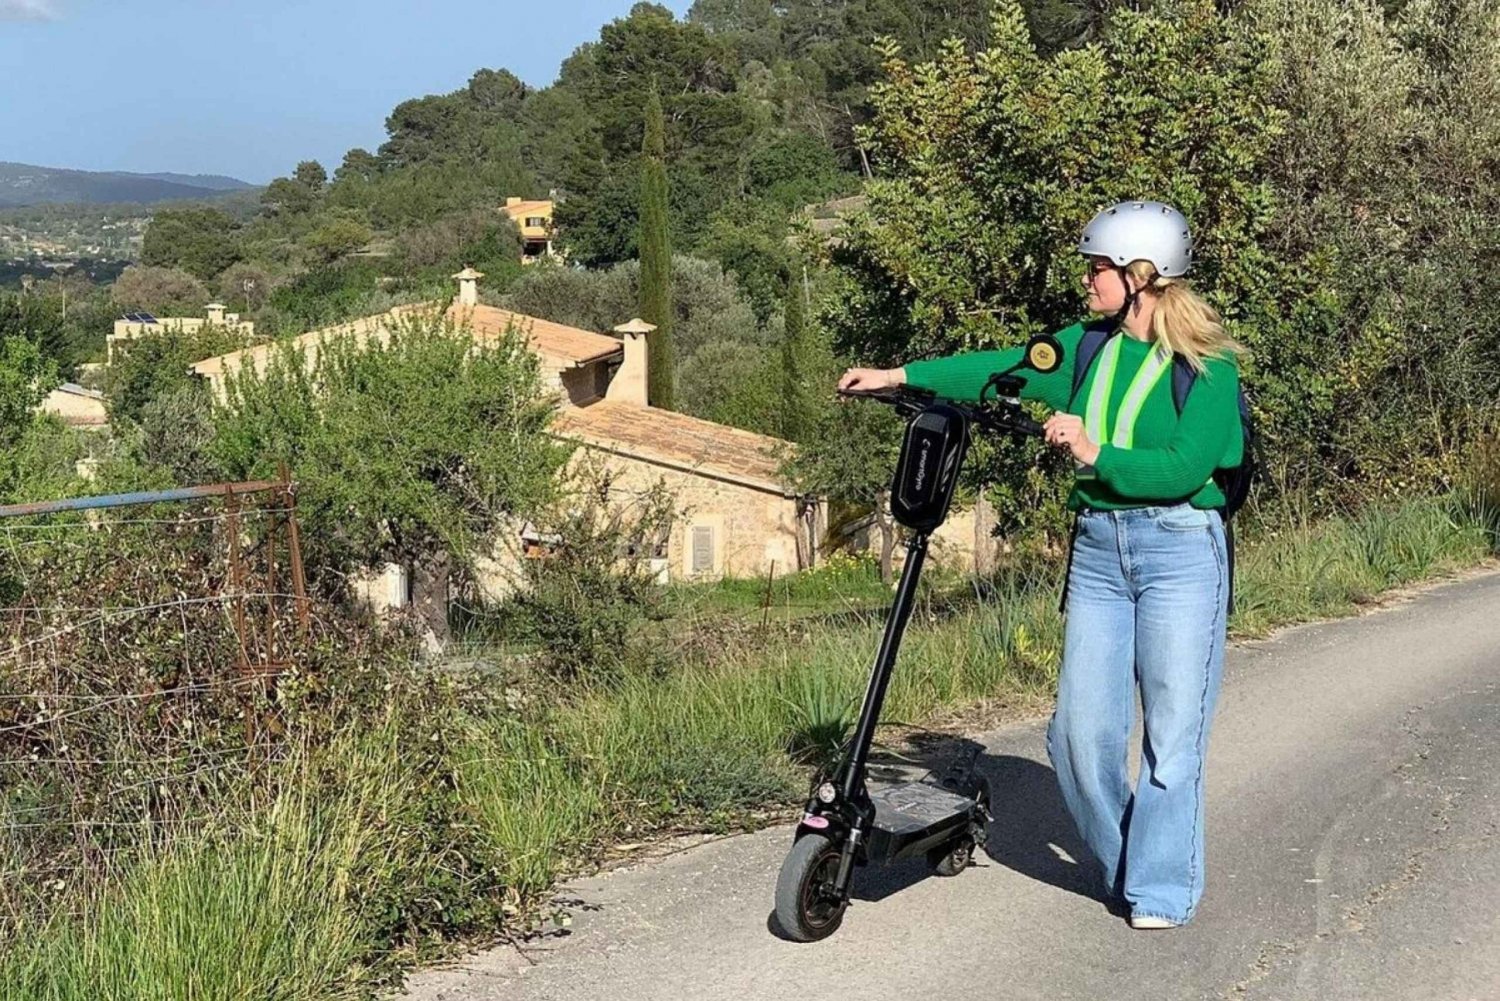 Dagvullende tour: E-scooter en Wijnbelevenis Mallorca